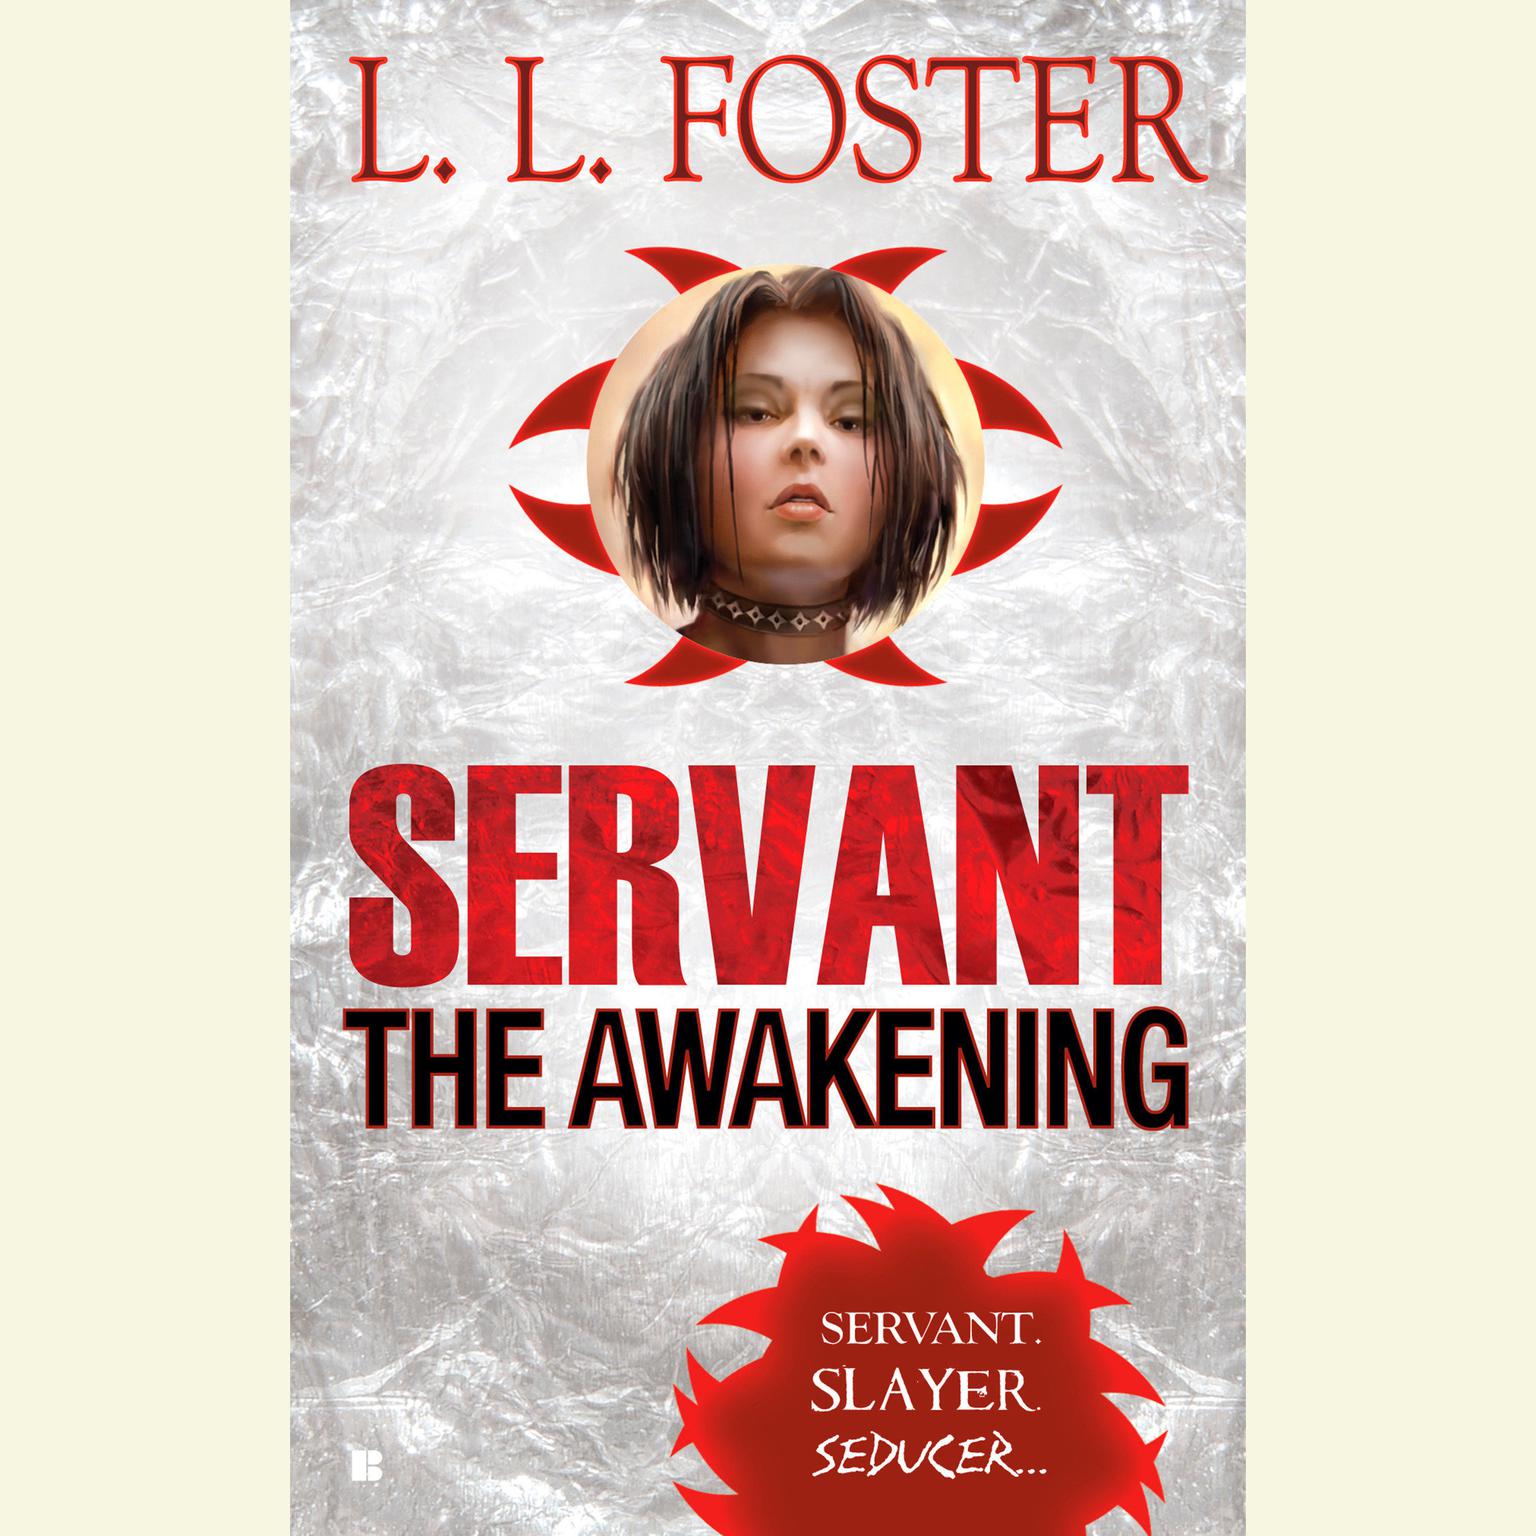 Servant: the Awakening Audiobook, by Lori Foster